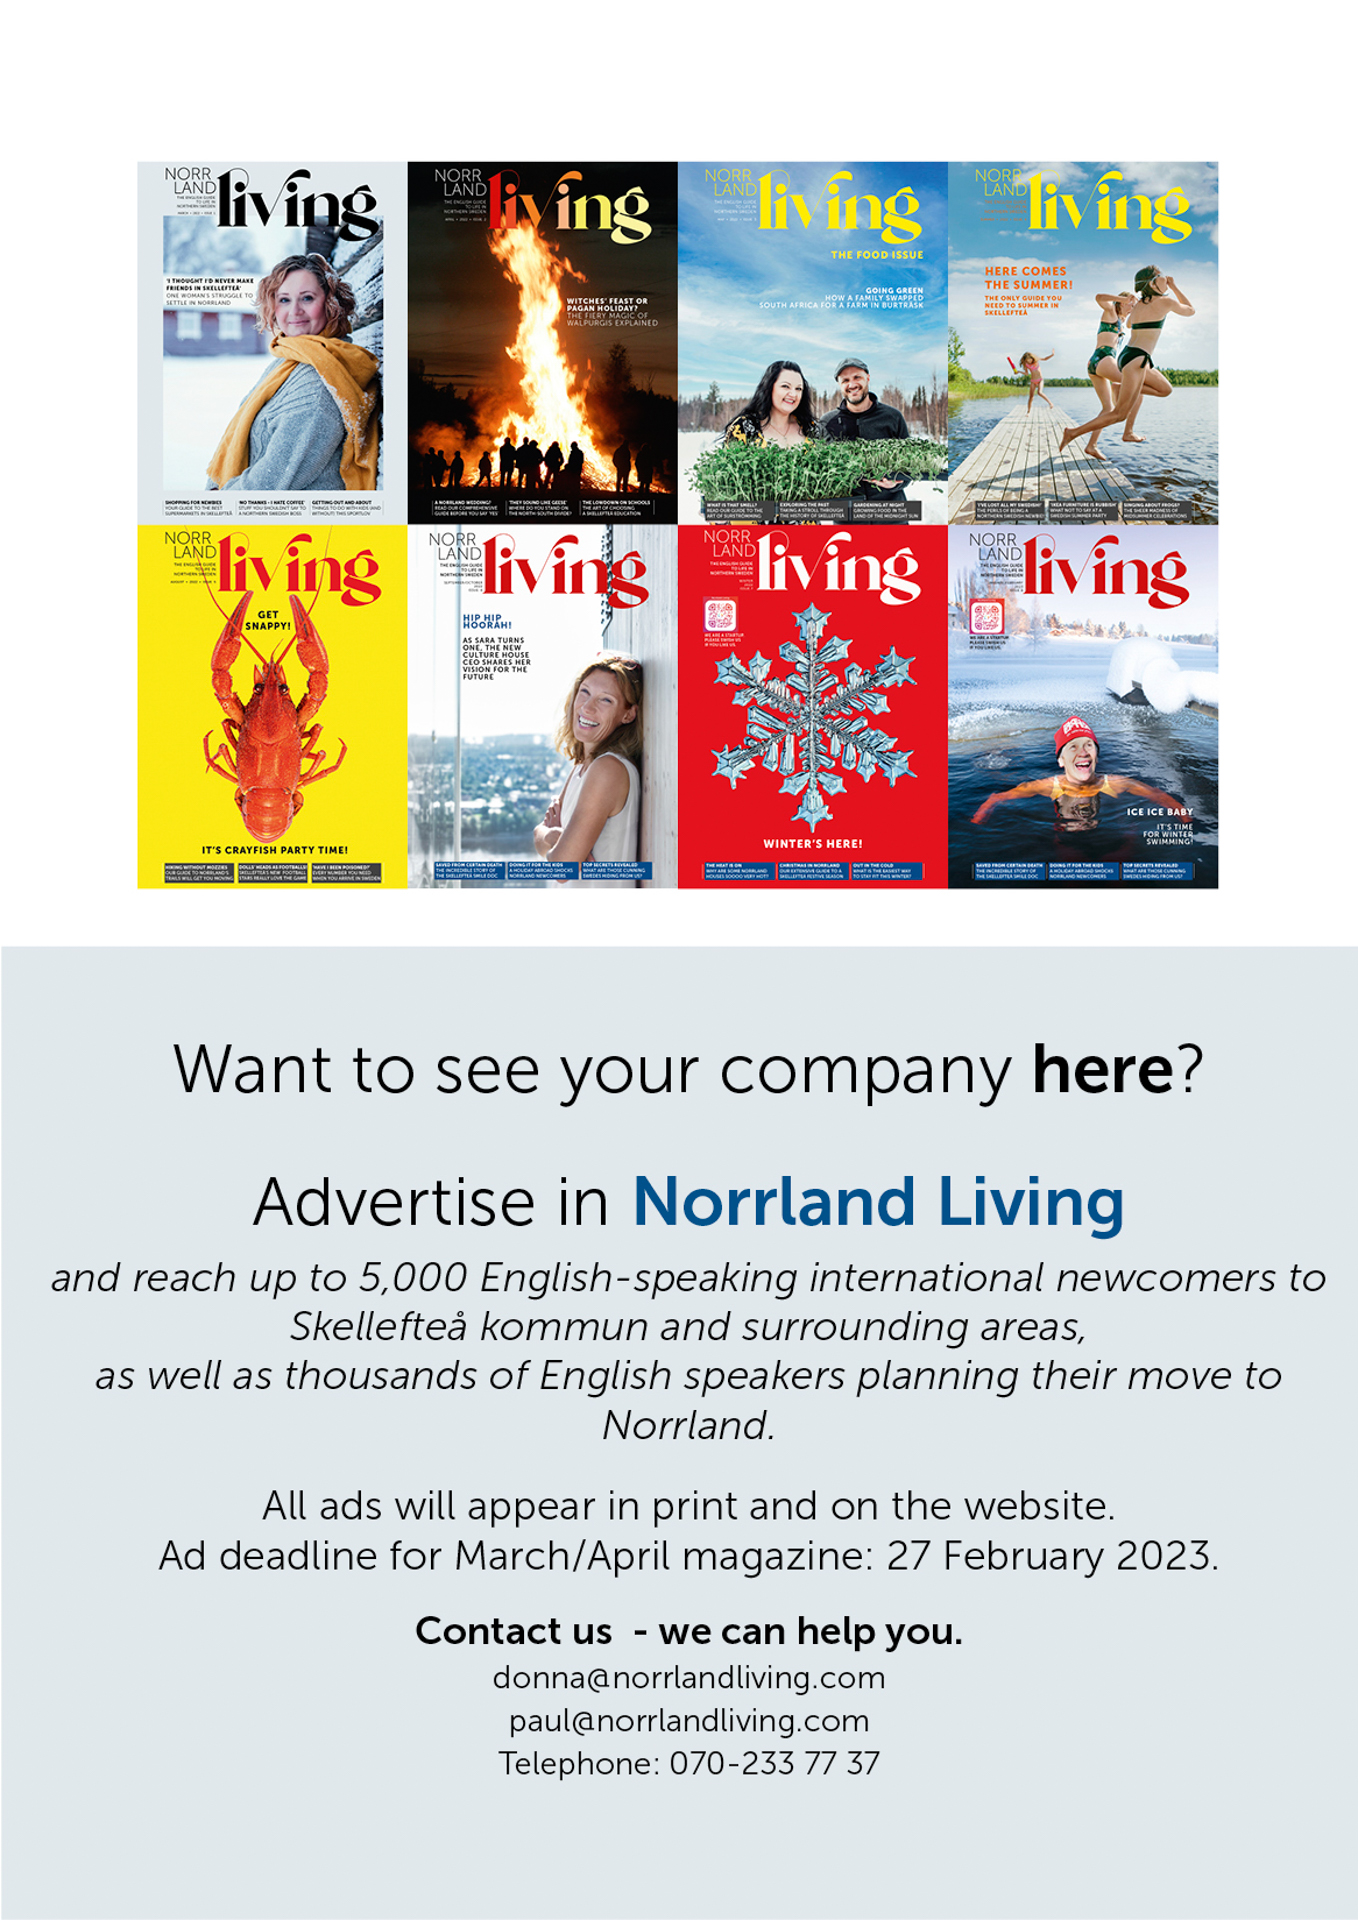 Norrland Living advertising information